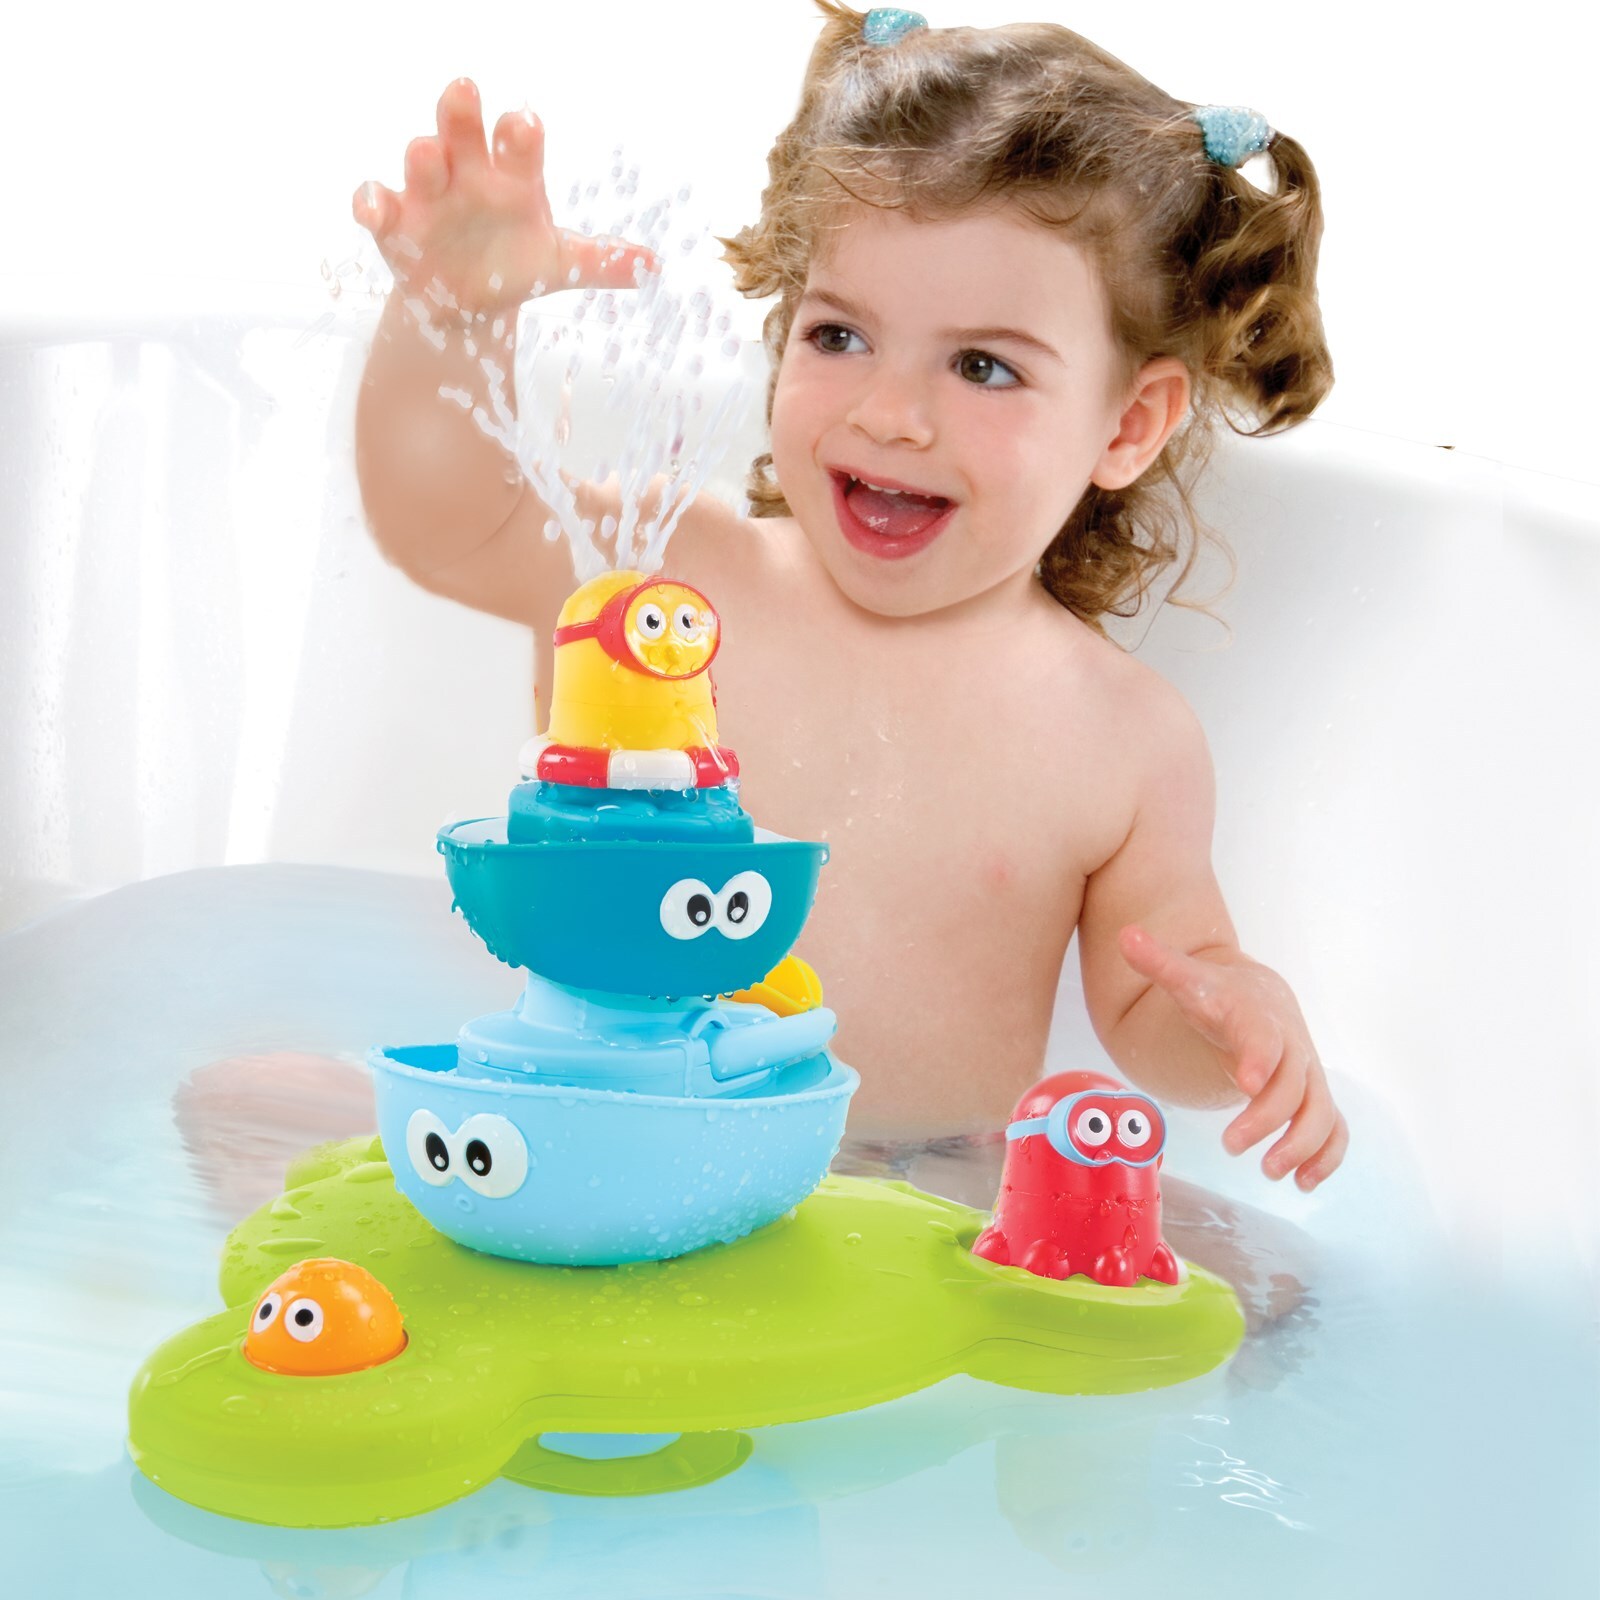 Игрушка для купания в ванне. Фонтан-пирамидку Yookidoo. Yookidoo игрушка. Yookidoo фонтан. Веселый фонтан Yookidoo.